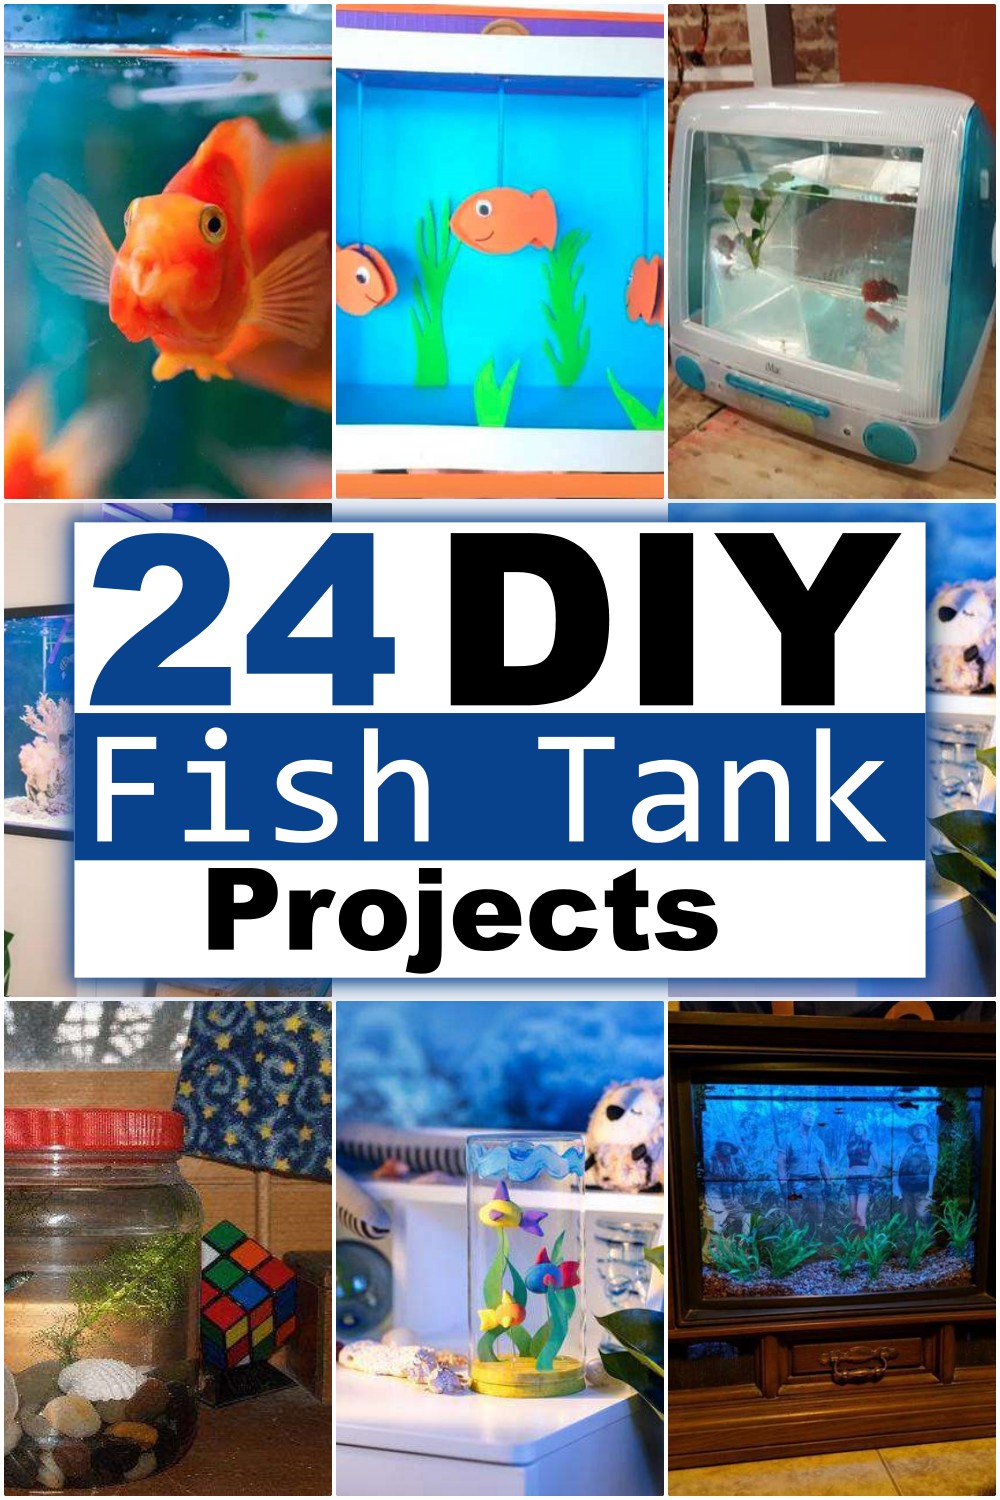 DIY Fish Tank Projects